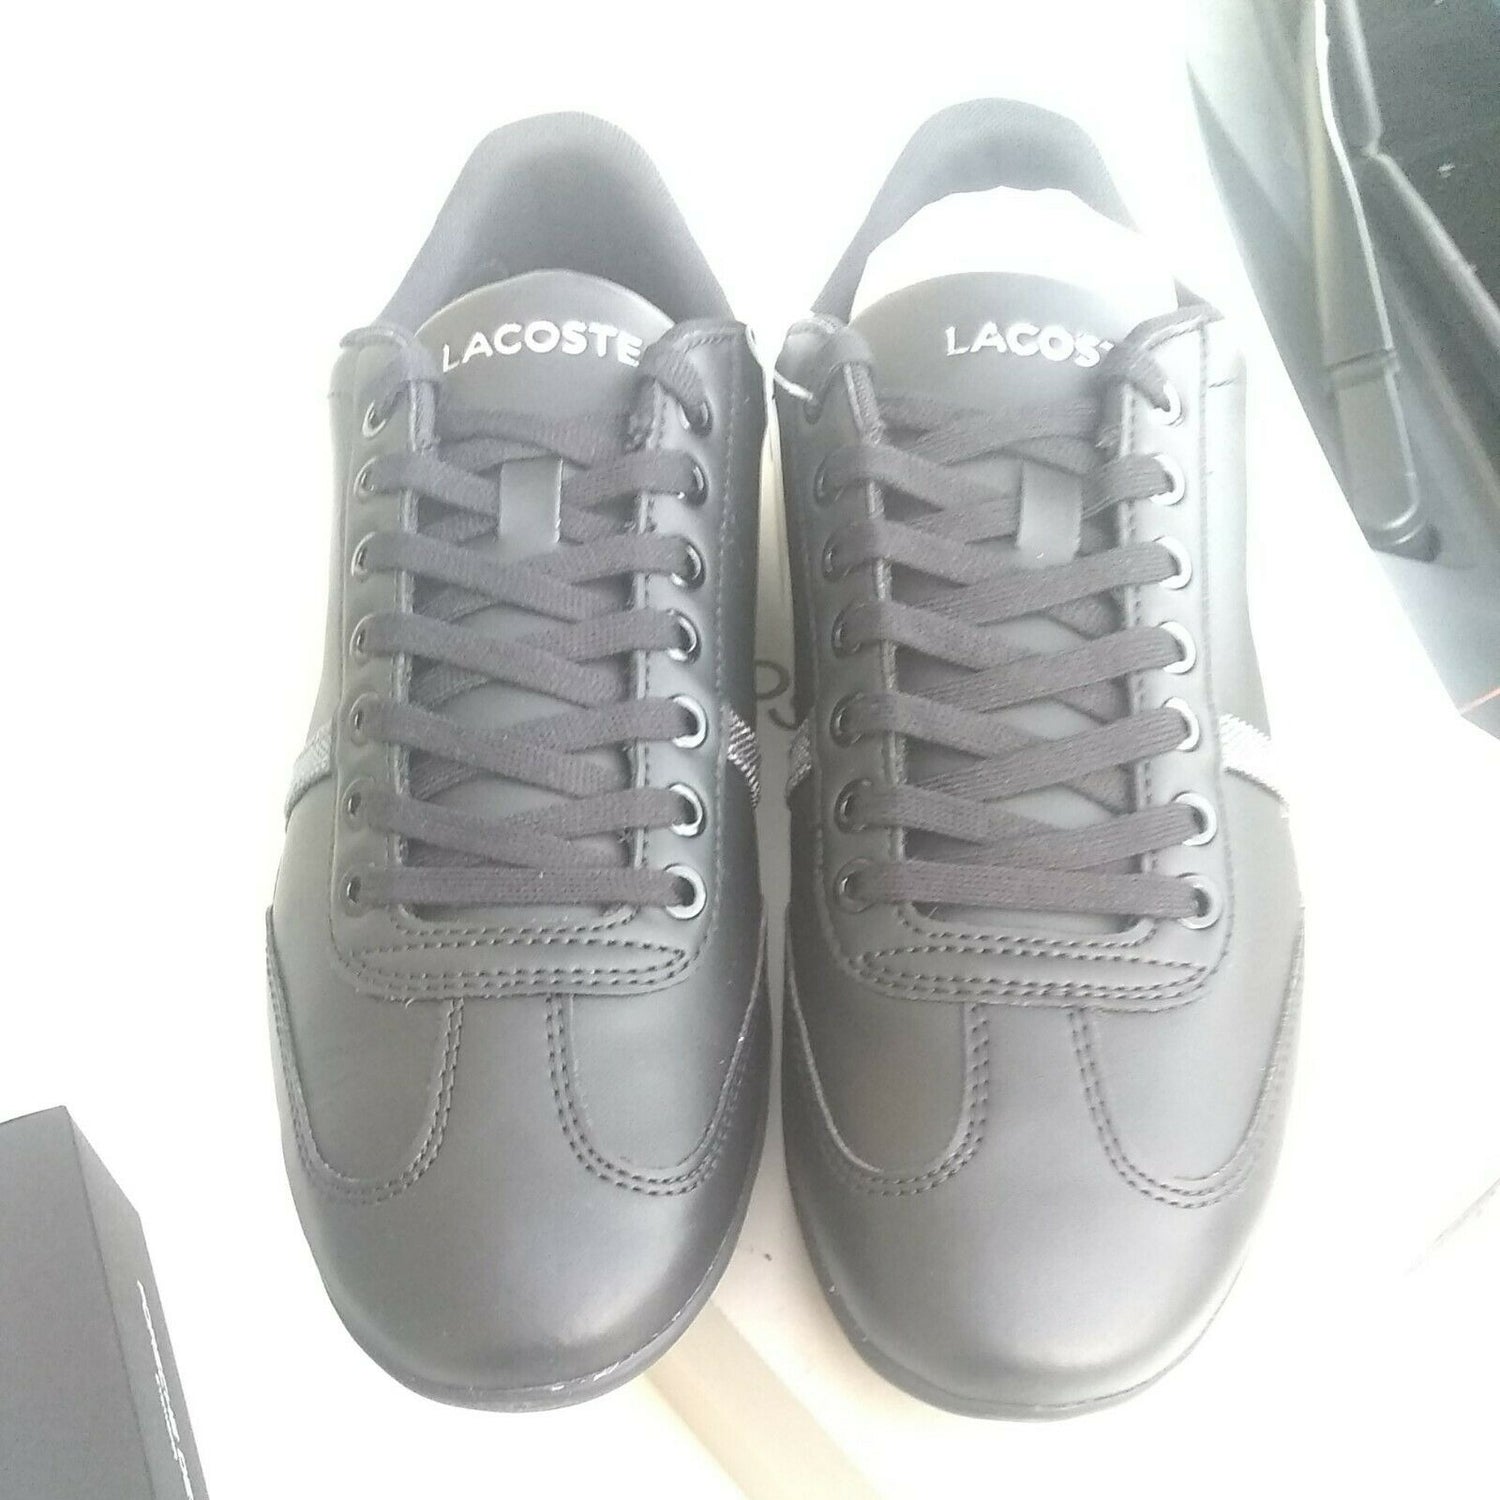 Lacoste men casual shoes 9.5 Misano sport 118 1 u cam black grey